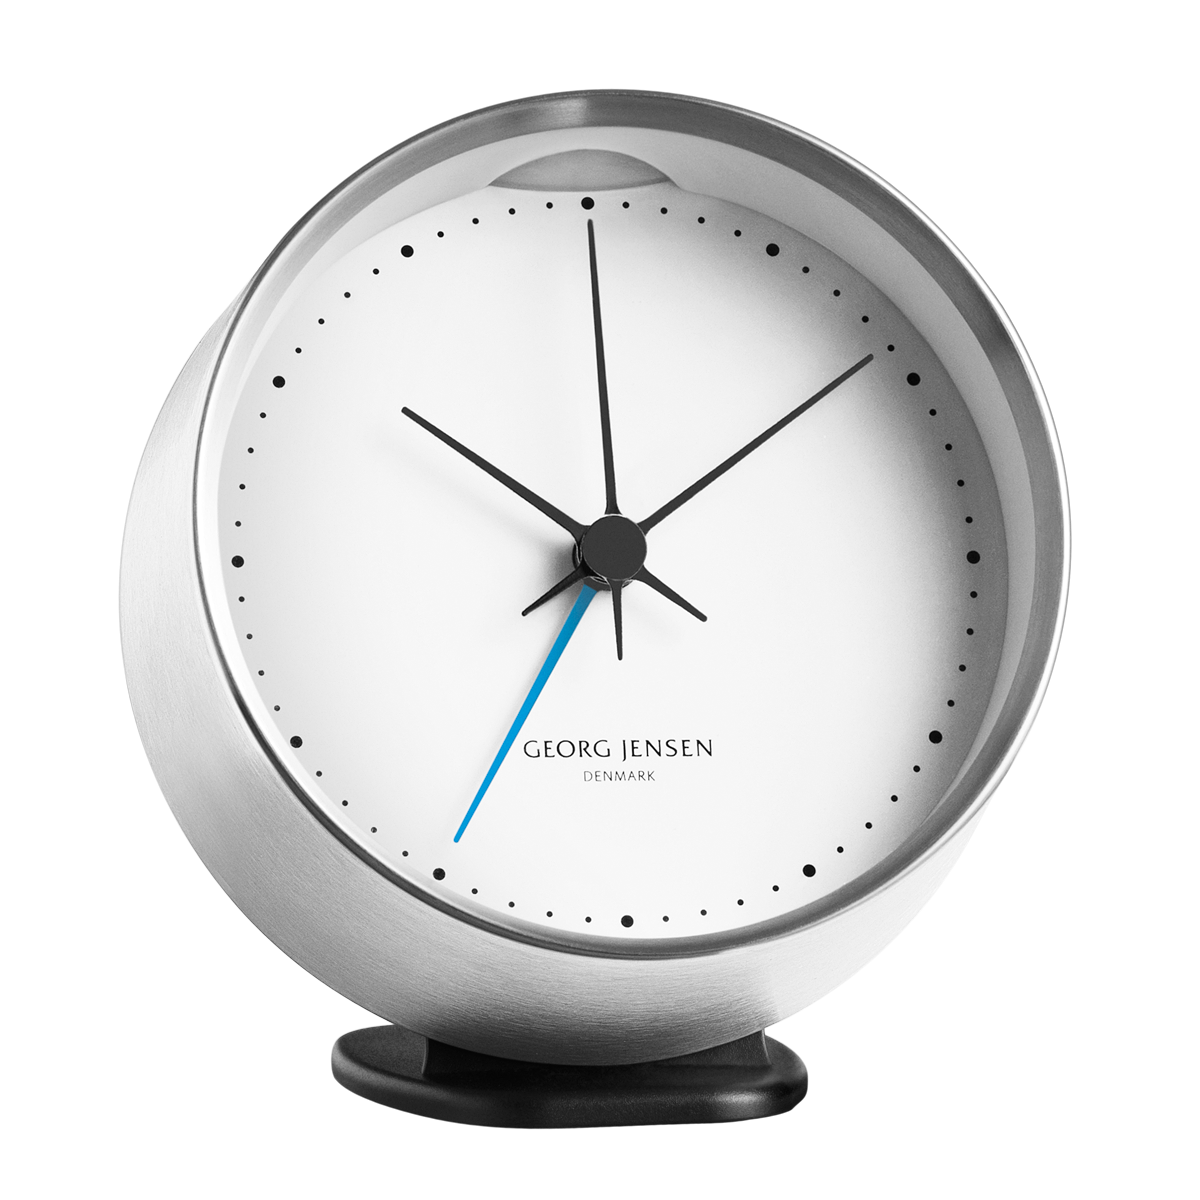 Georg Jensen Alarm Clock by Henning Koppel